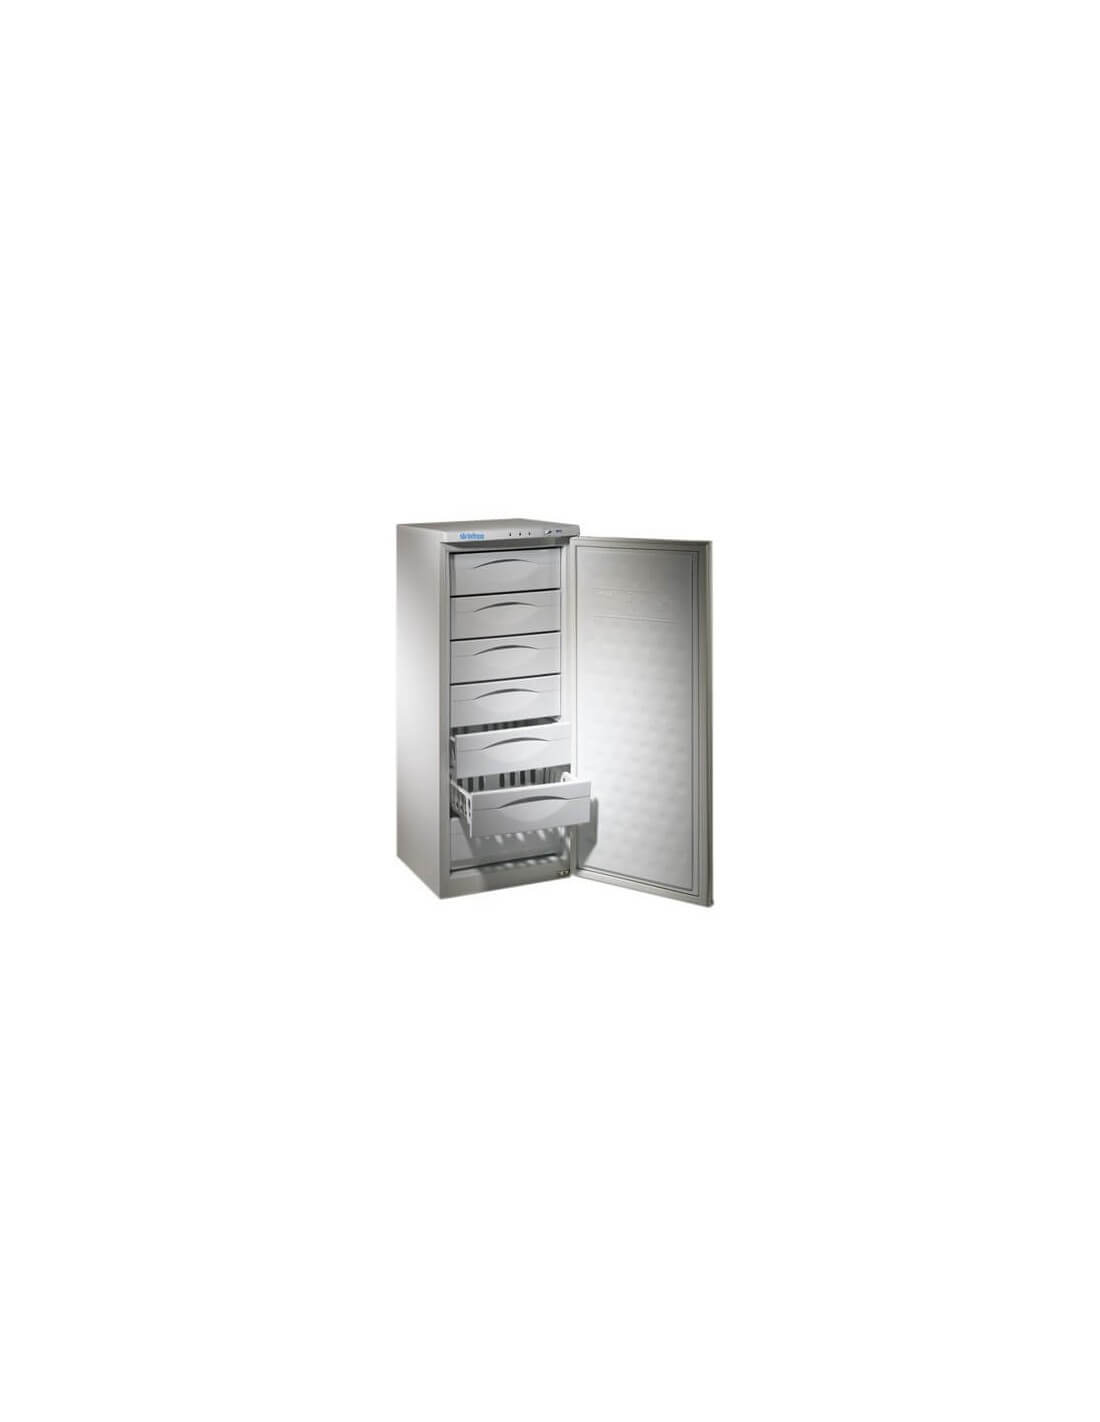 Congelador vertical de 9 cajones Infrico CV 330 HC – Hosteleris